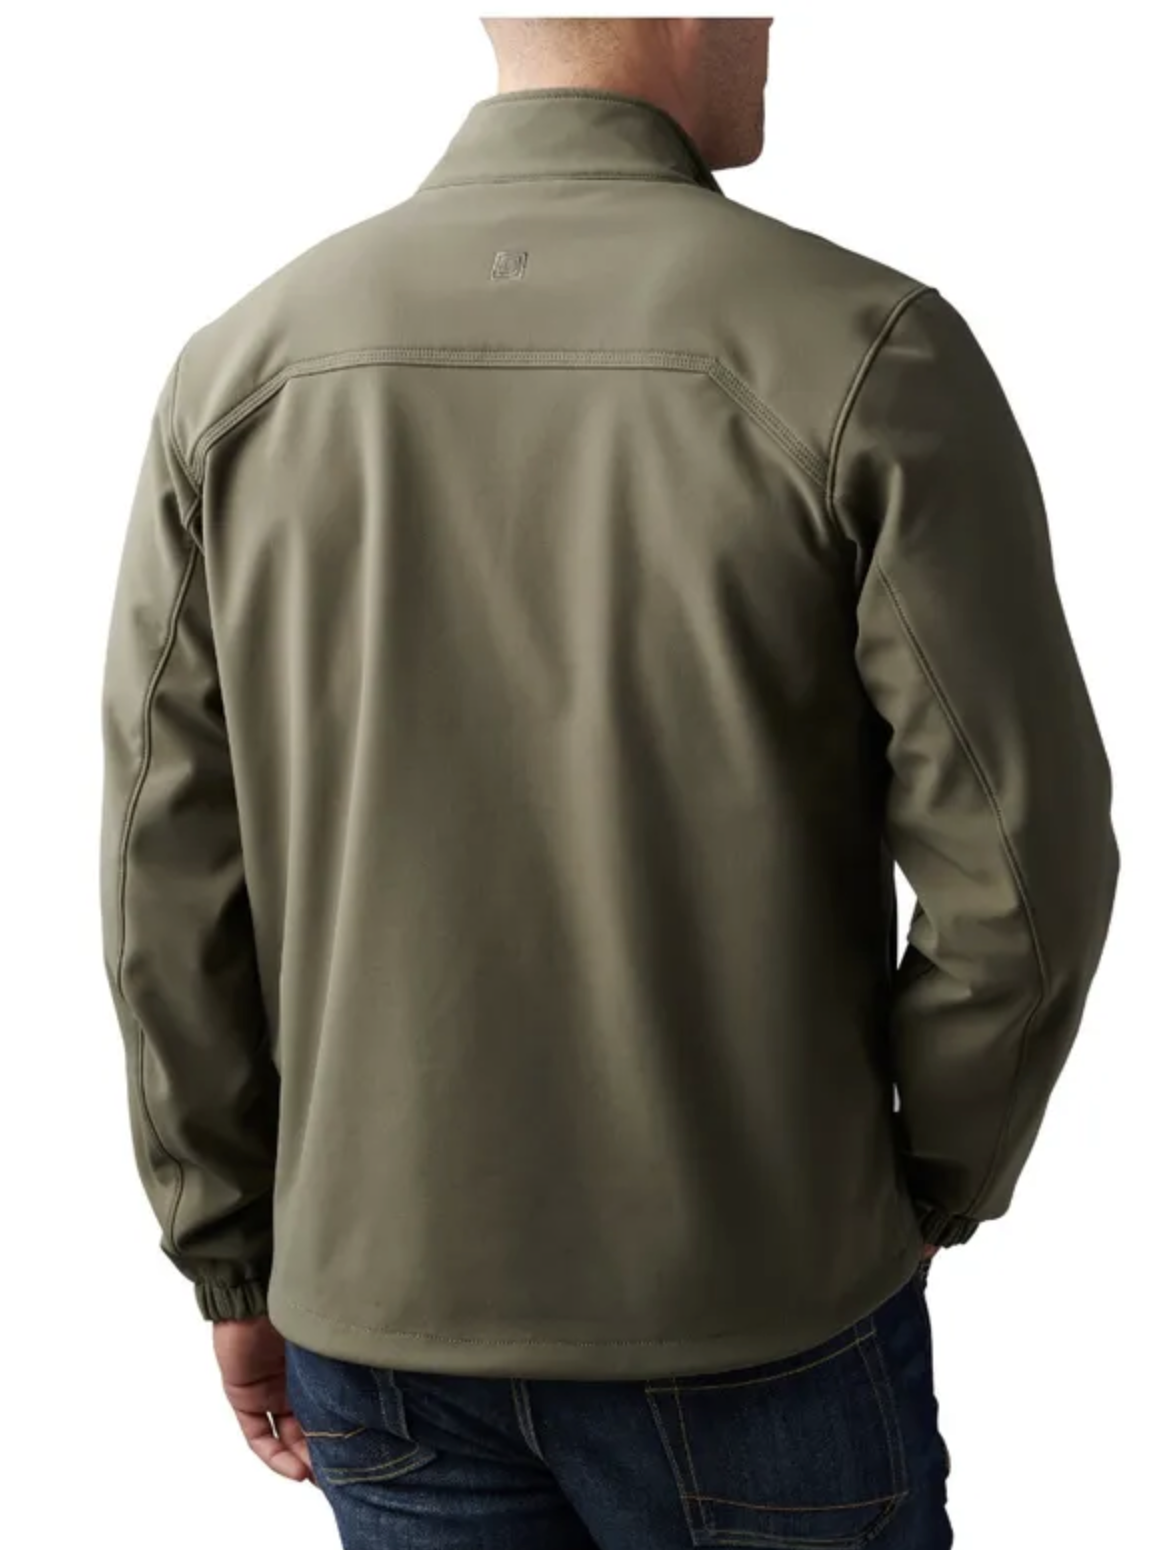 5.11 - Nevada Softshell Jacket - Ranger Green (186)